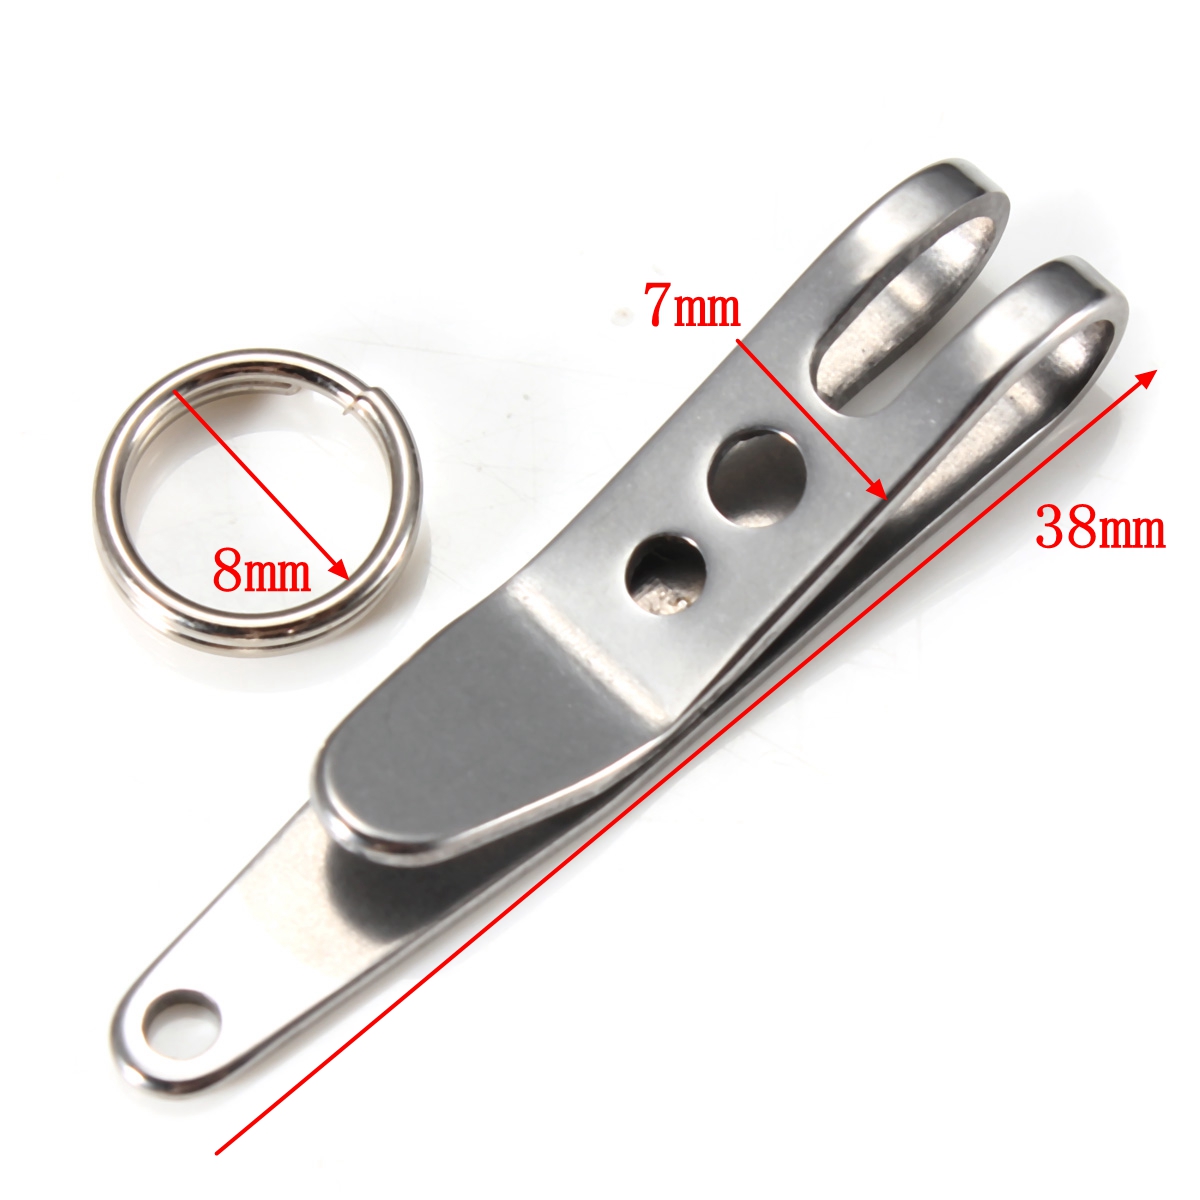 Xtools-EDC-Mini-Clip-Flashlight-Clip-Money-Cash-Holder-Key-Chain-Clip-With-Ring-988356-4